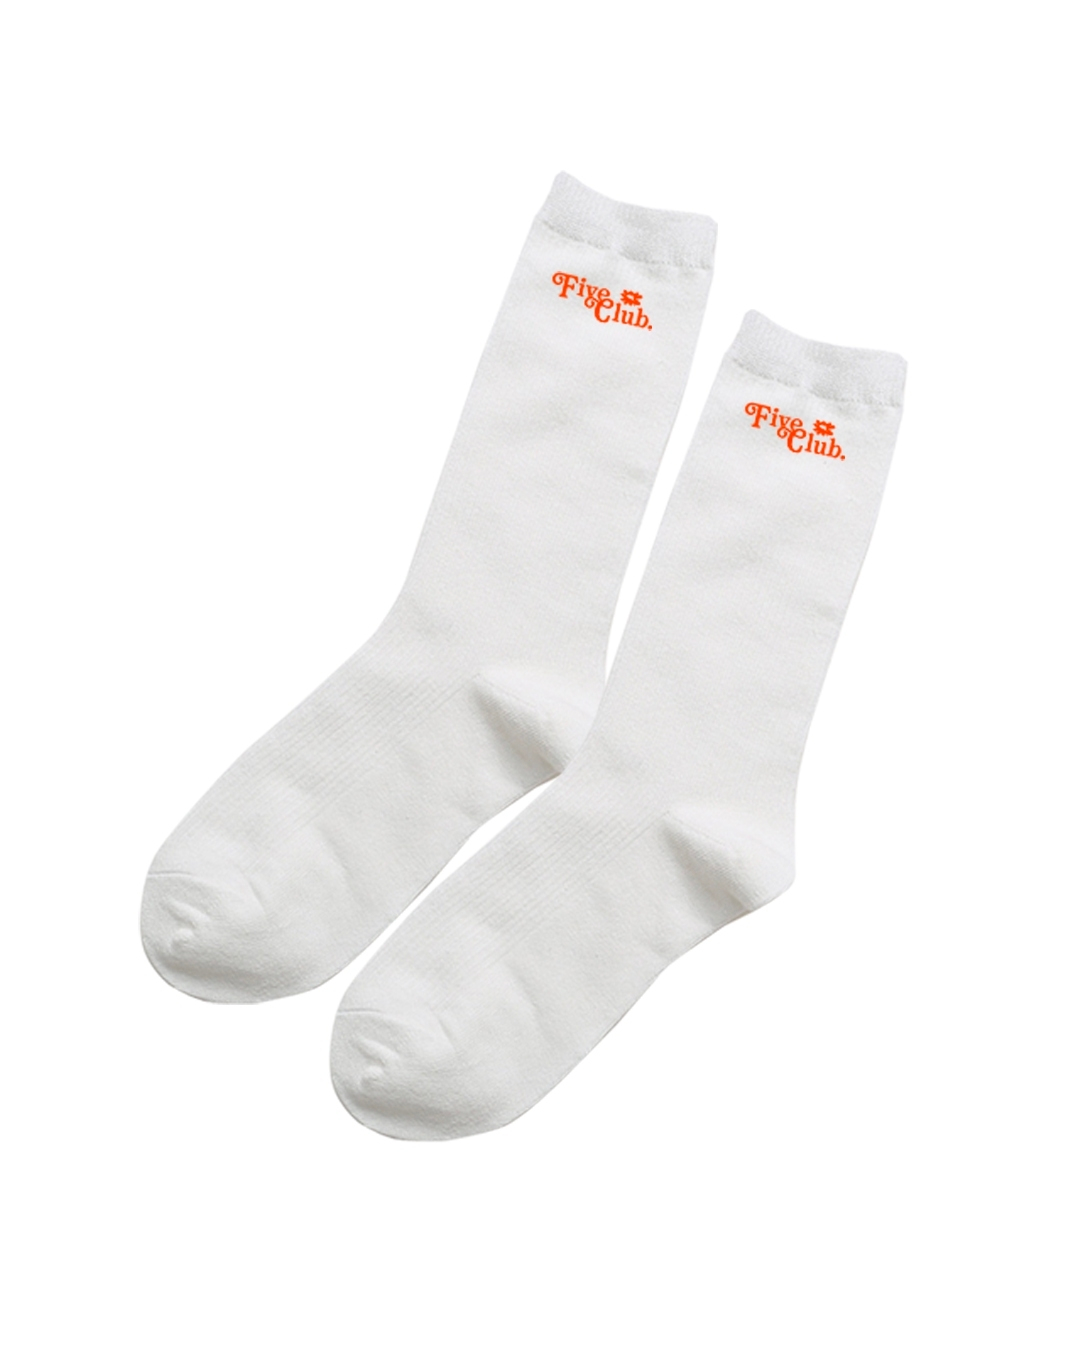 Super.5 Five Club Sock (White-Orange)